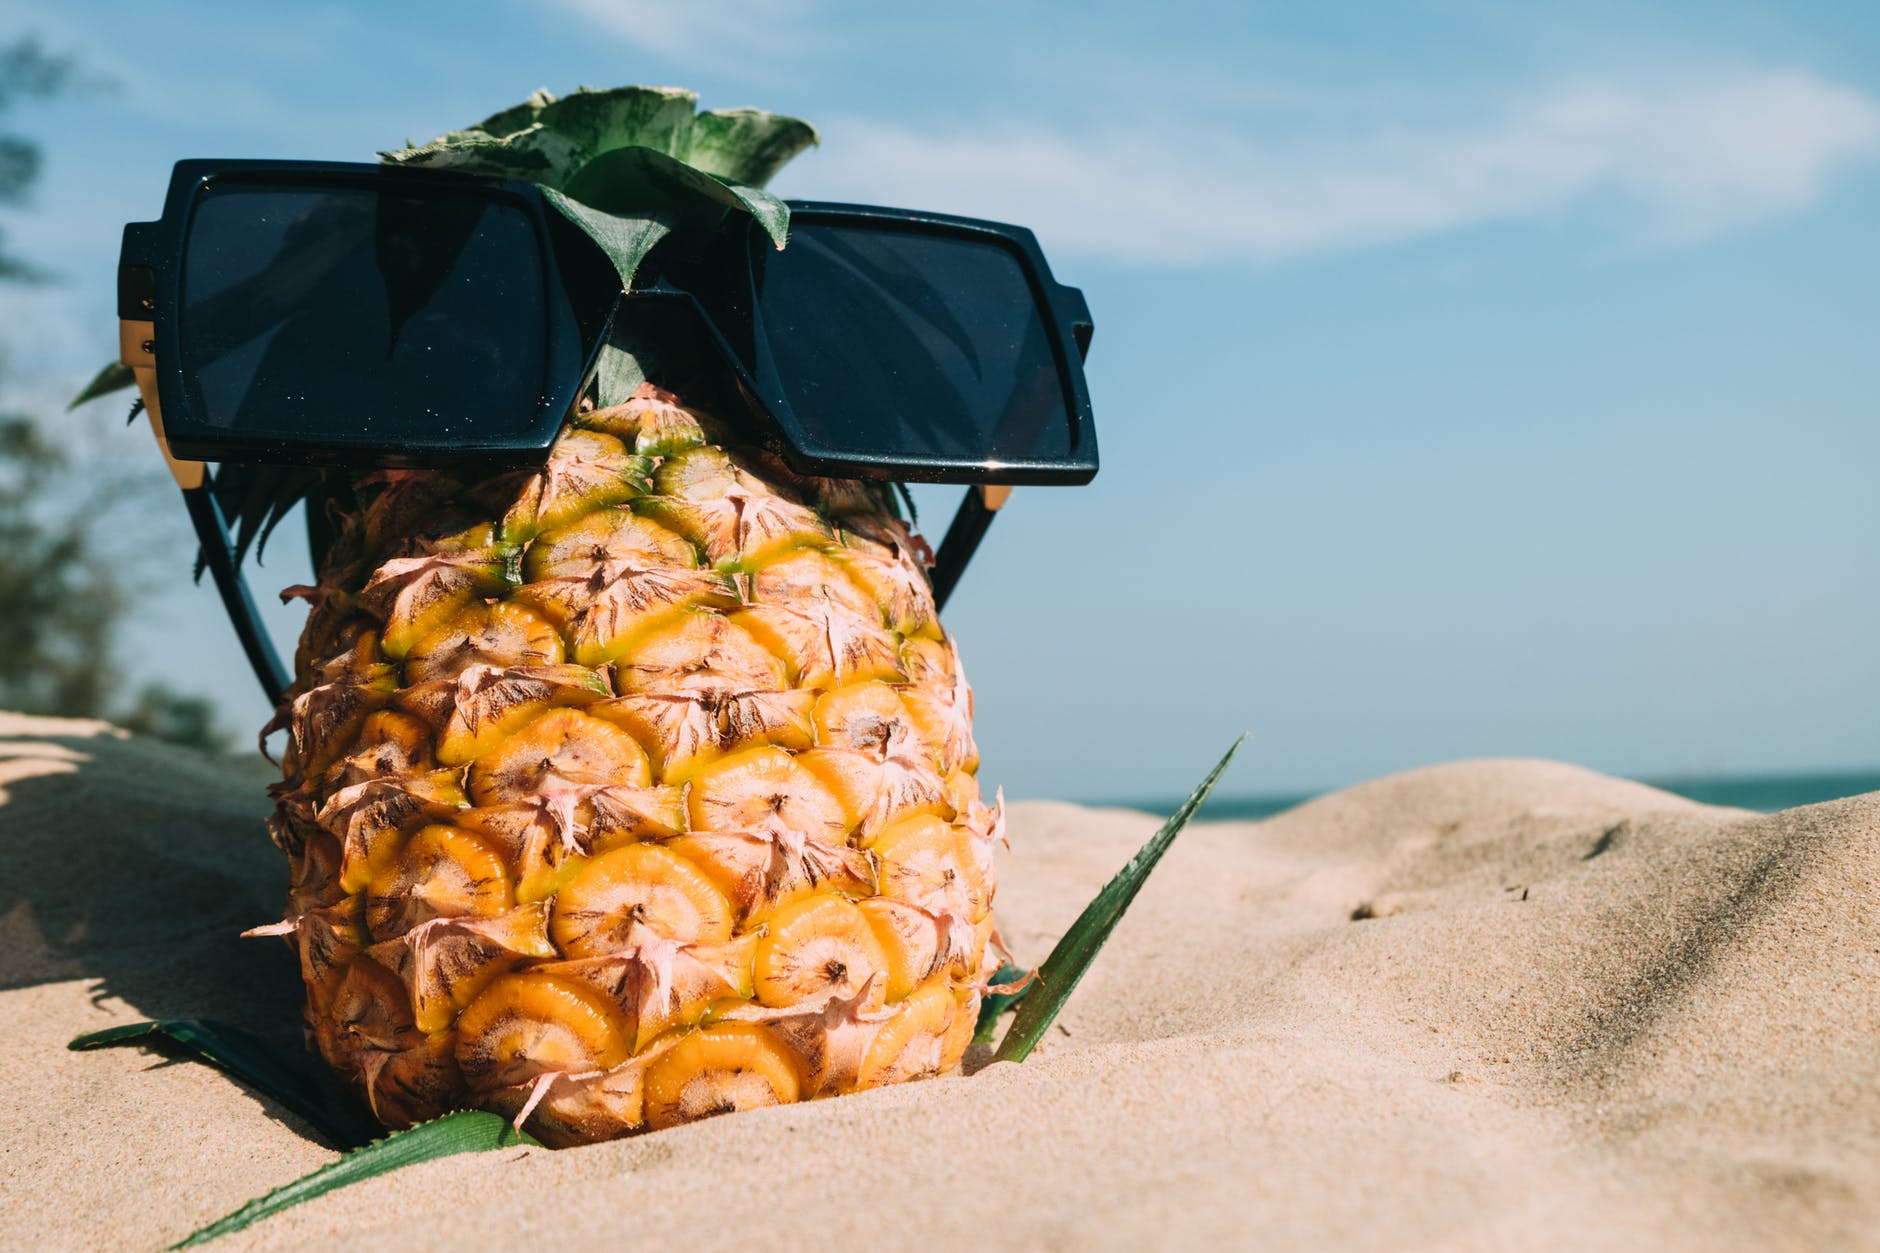 A pineapple on a beach wearing sunglasses